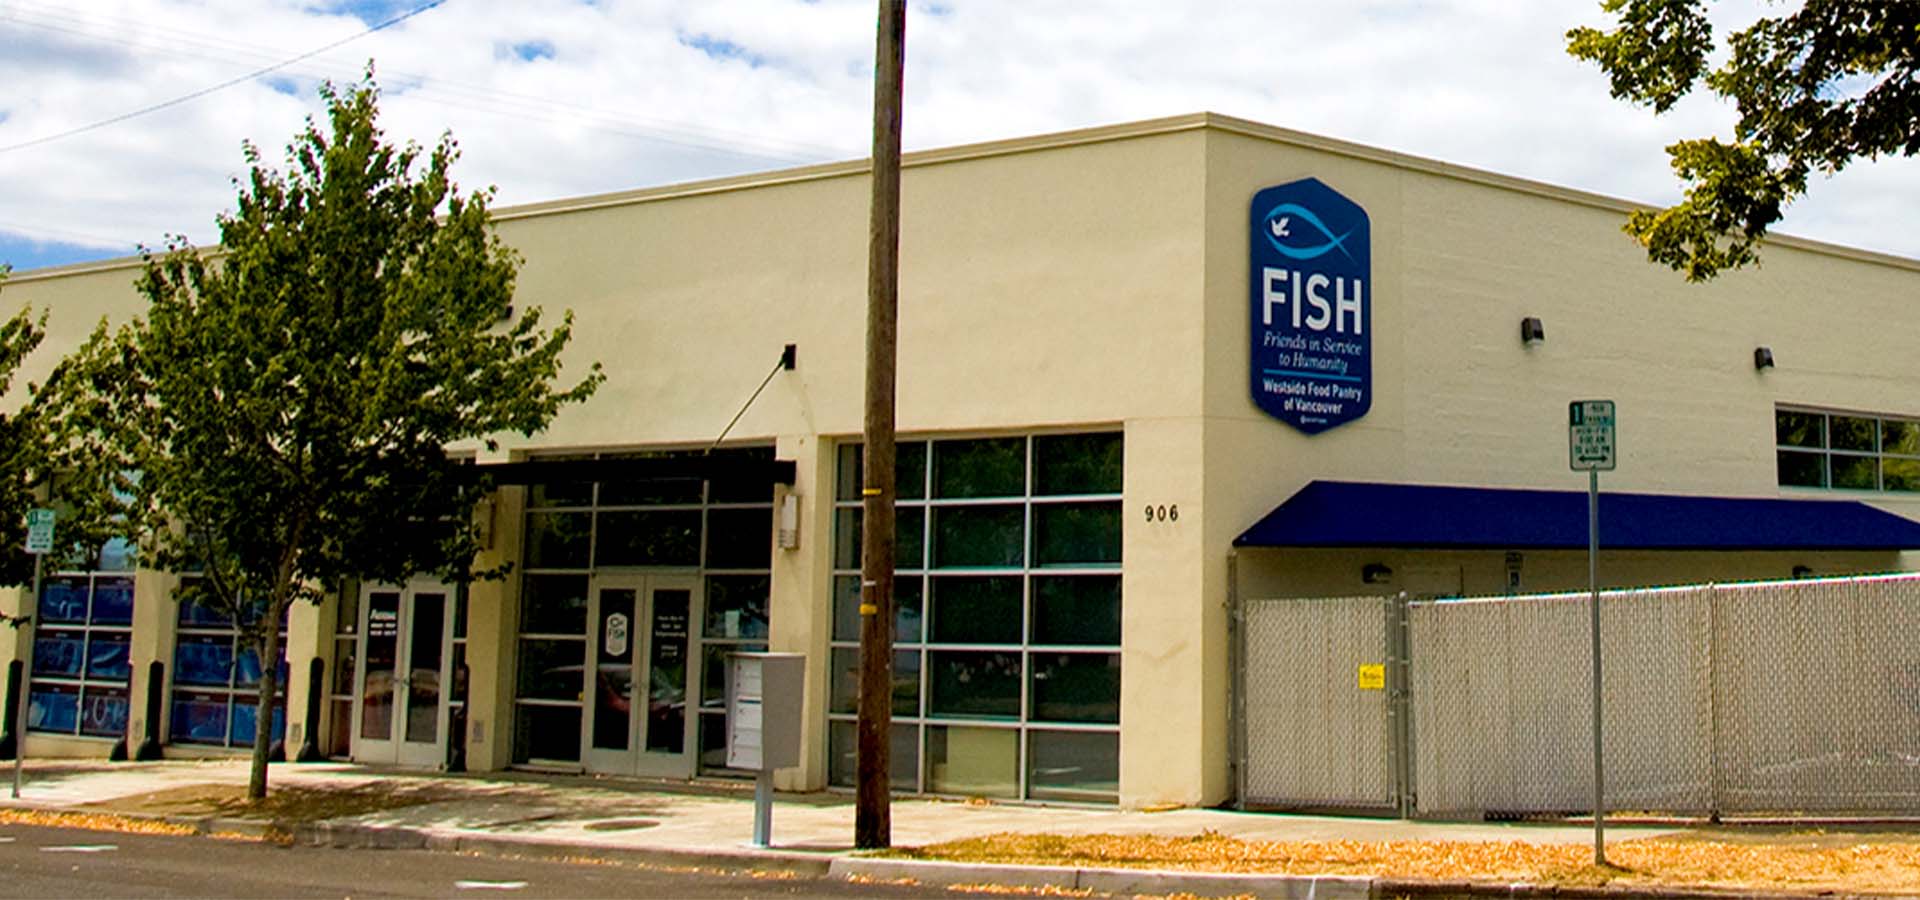 FISH Building